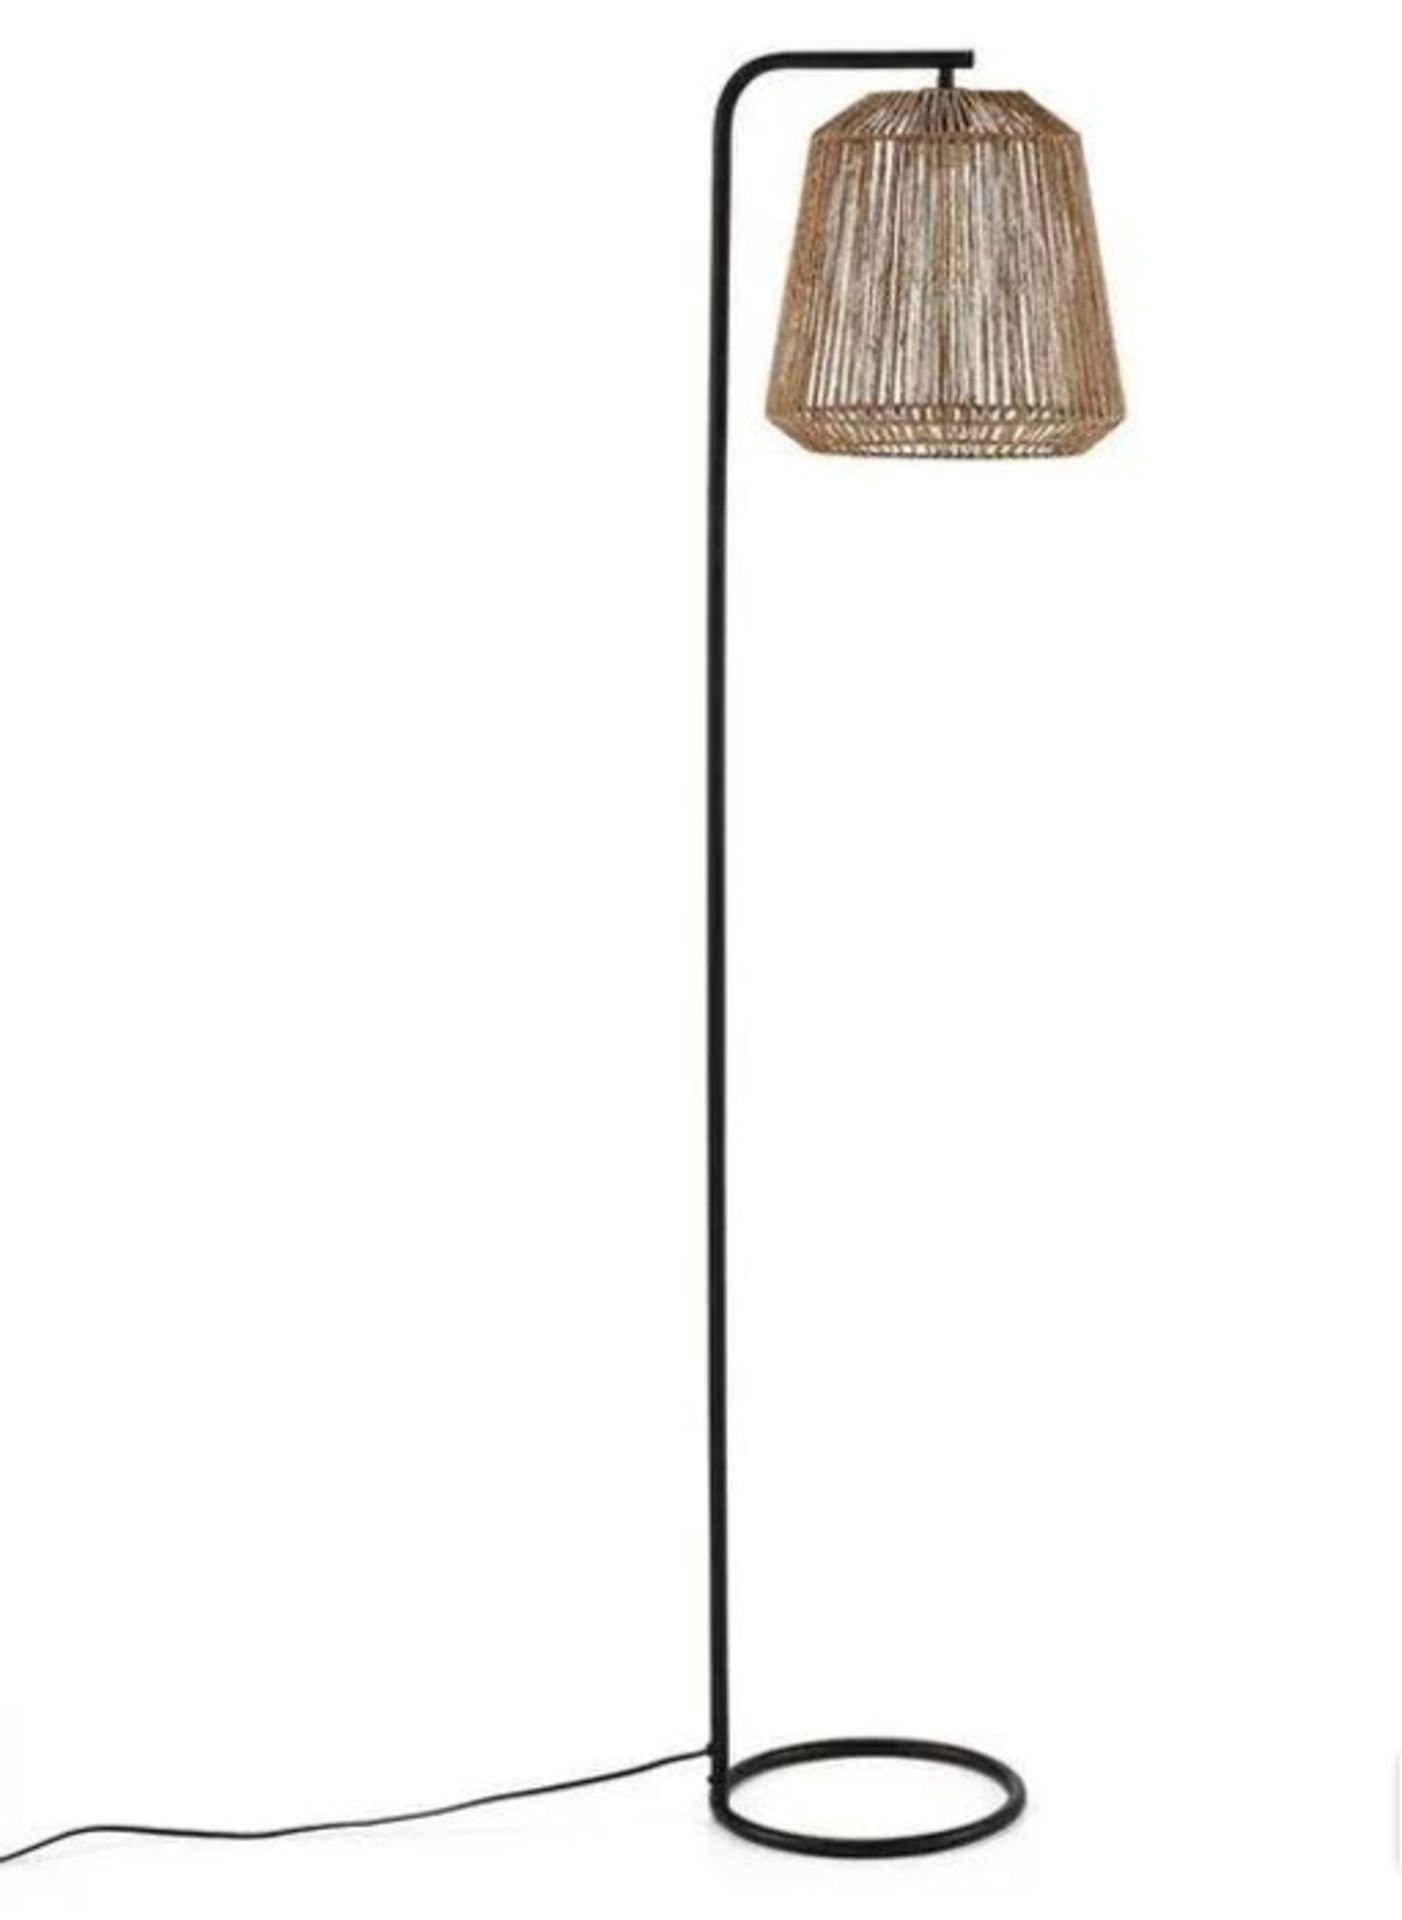 YAKU METAL AND HEMP FLOOR LAMP / RRP £140.00 / UNTESTED CUSTOMER RETURN. GRADE A, NO APPARENT